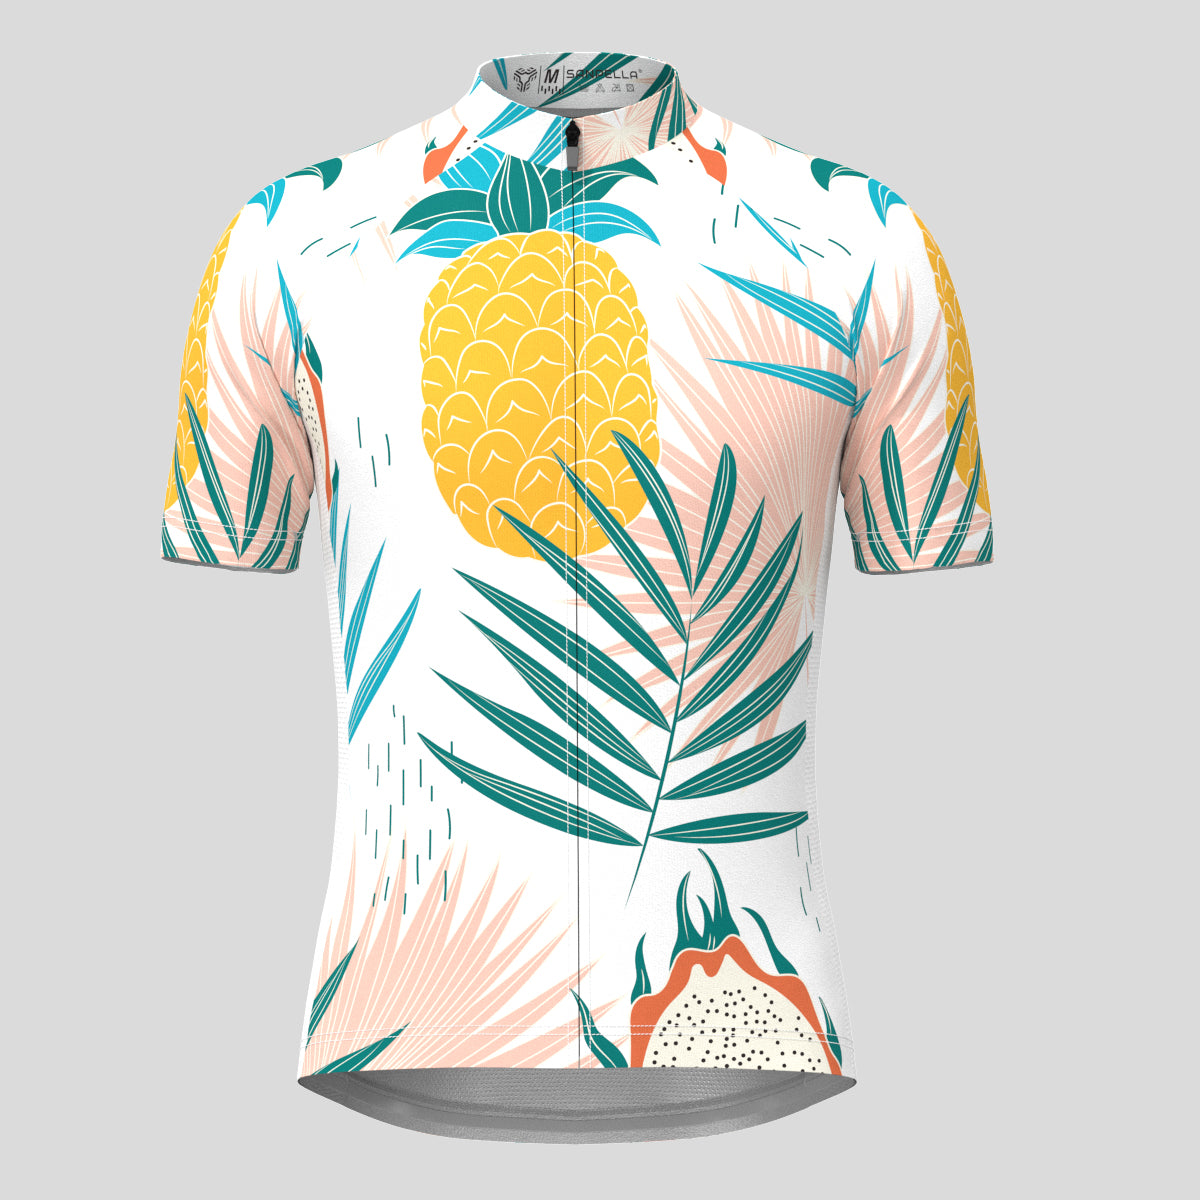 Pitaya Pineapple Print Men's Cycling Jersey - White